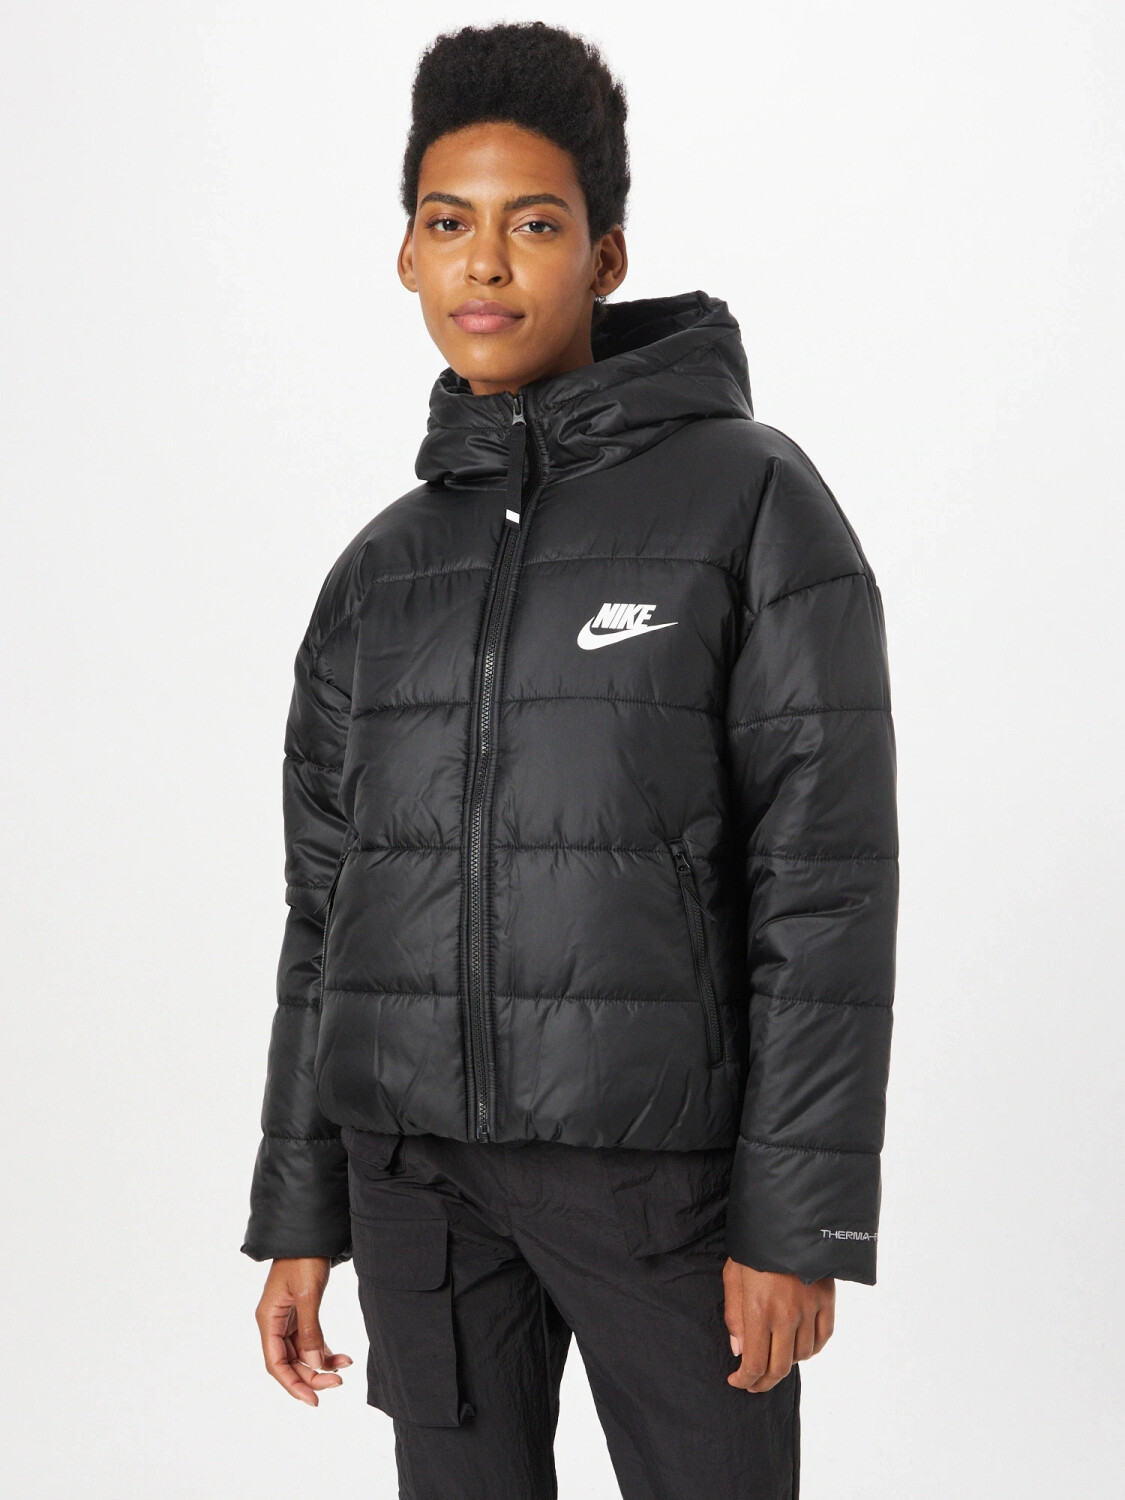 Nike Sportswear Therma-FIT Repel (DX1797) black/black/white ab € 99,99 |  Preisvergleich bei